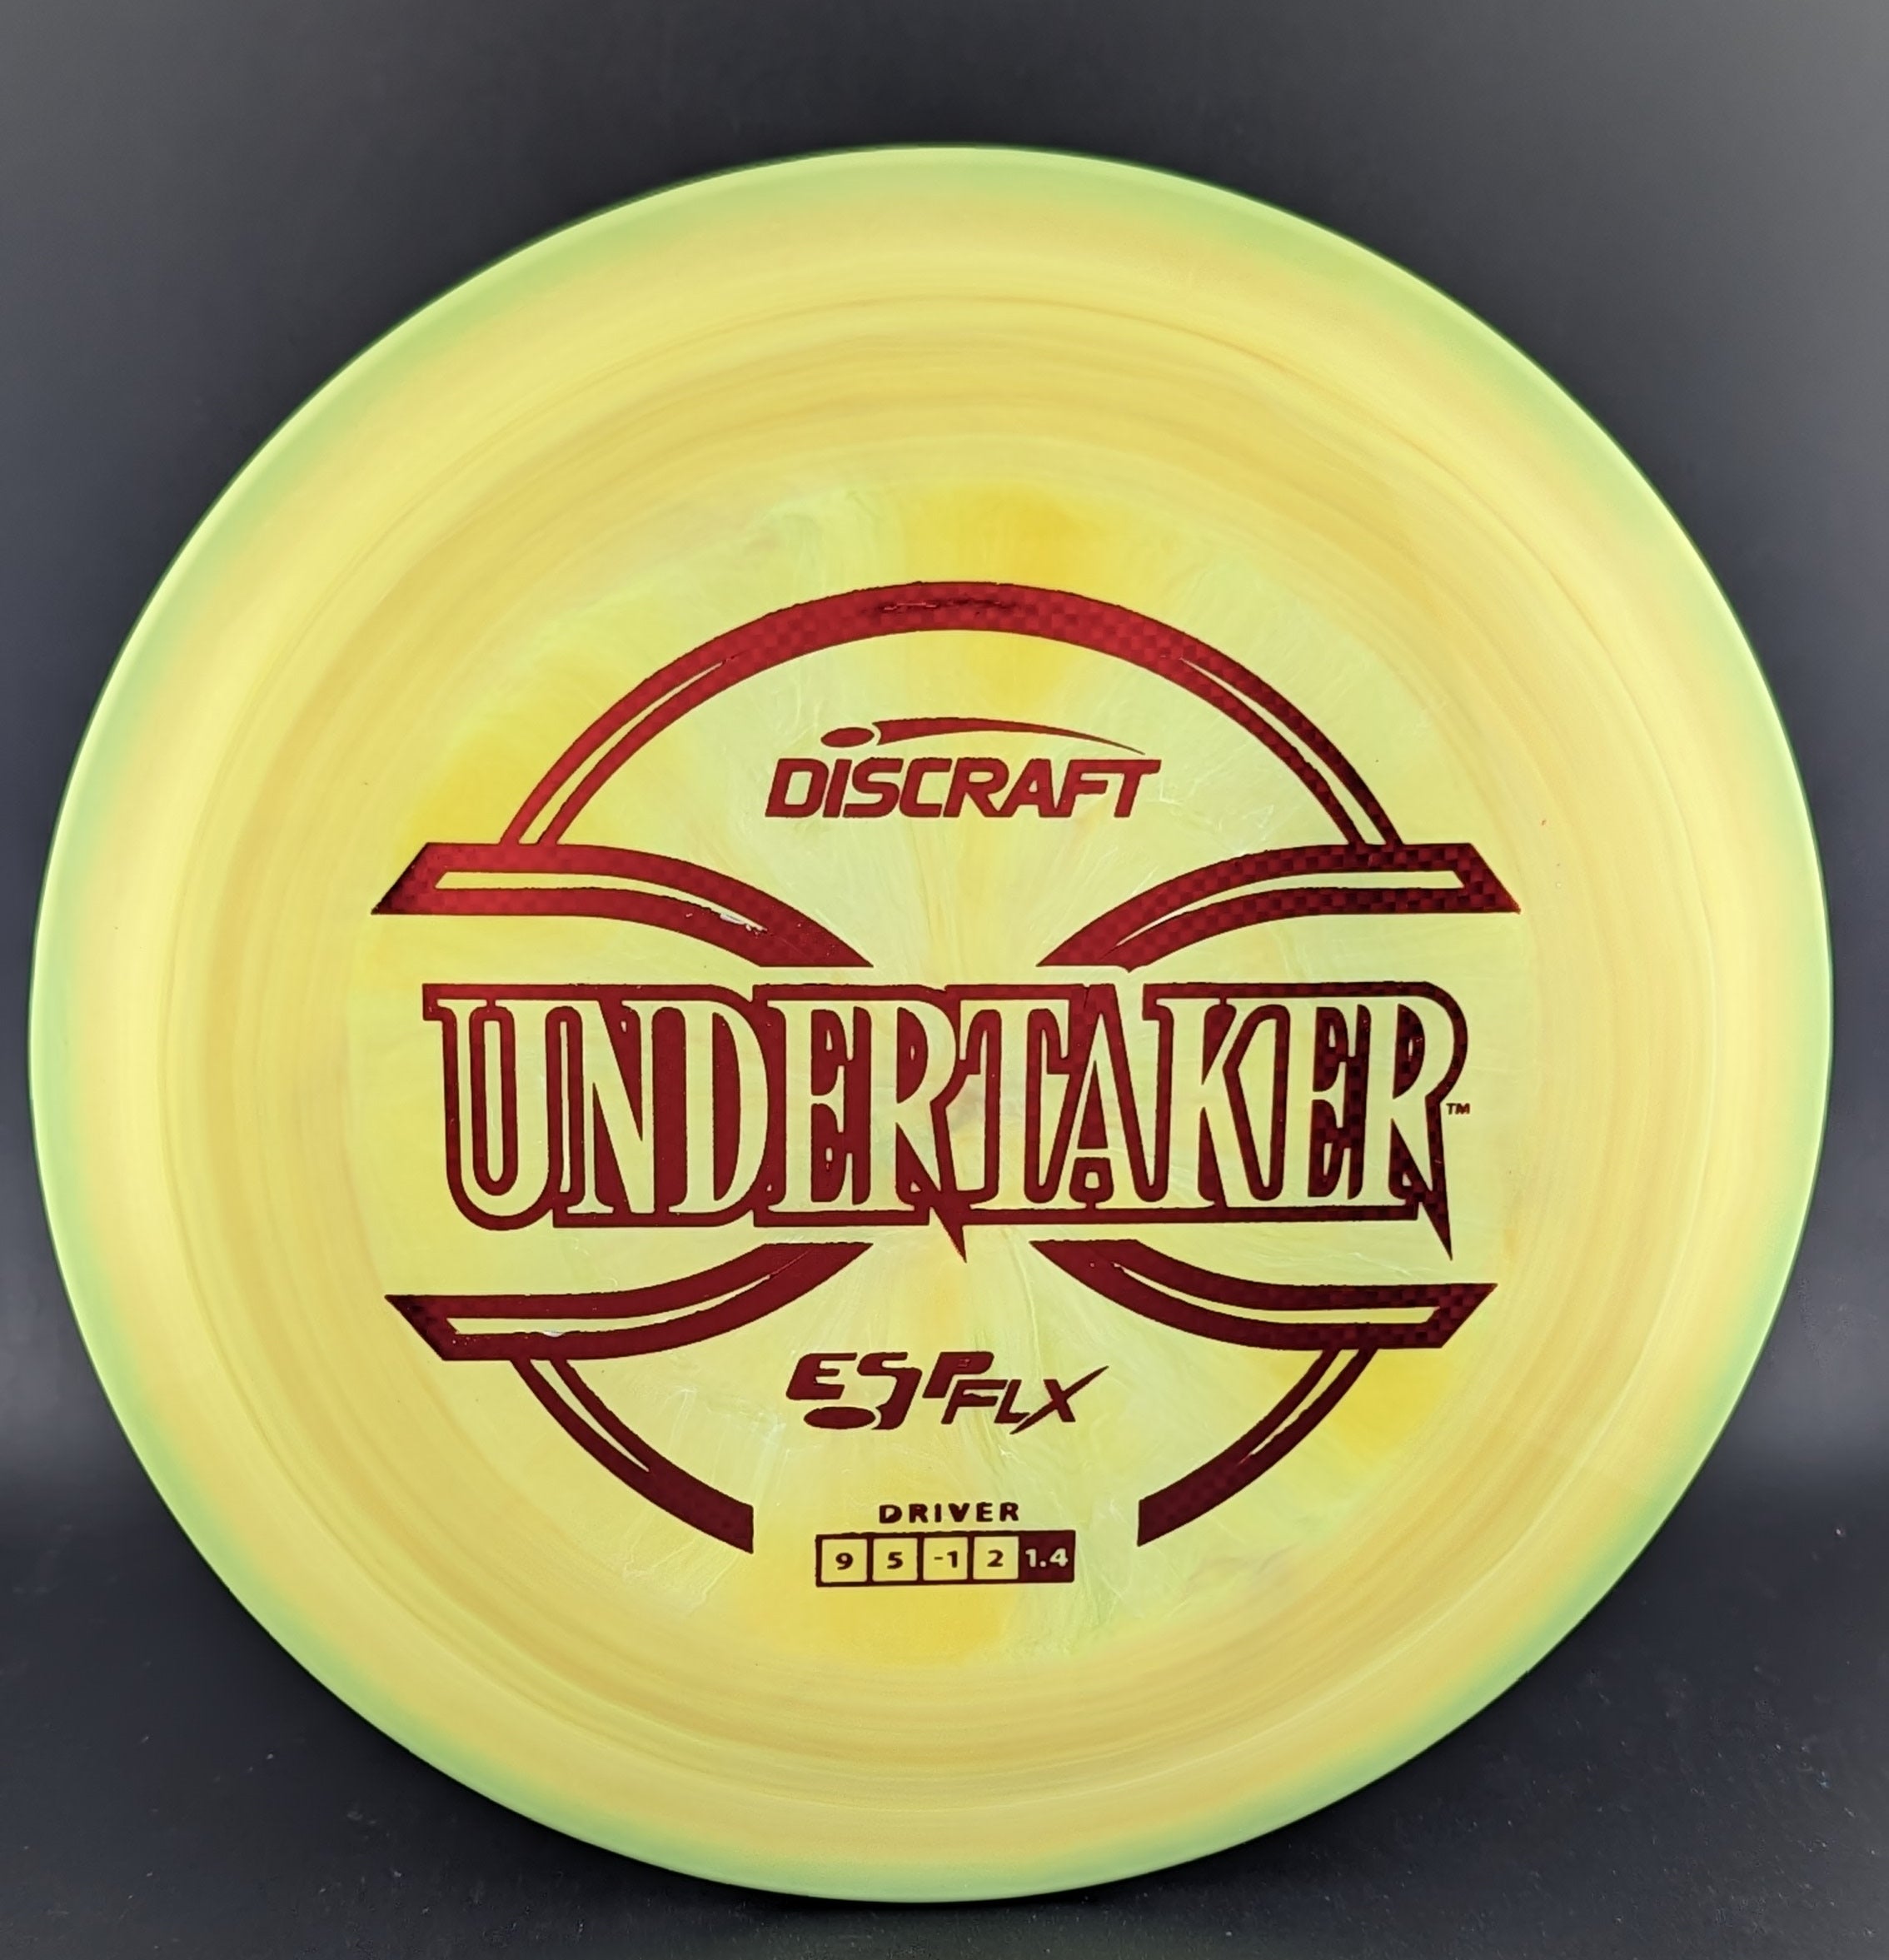 Discraft ESP Flx Undertaker - 0